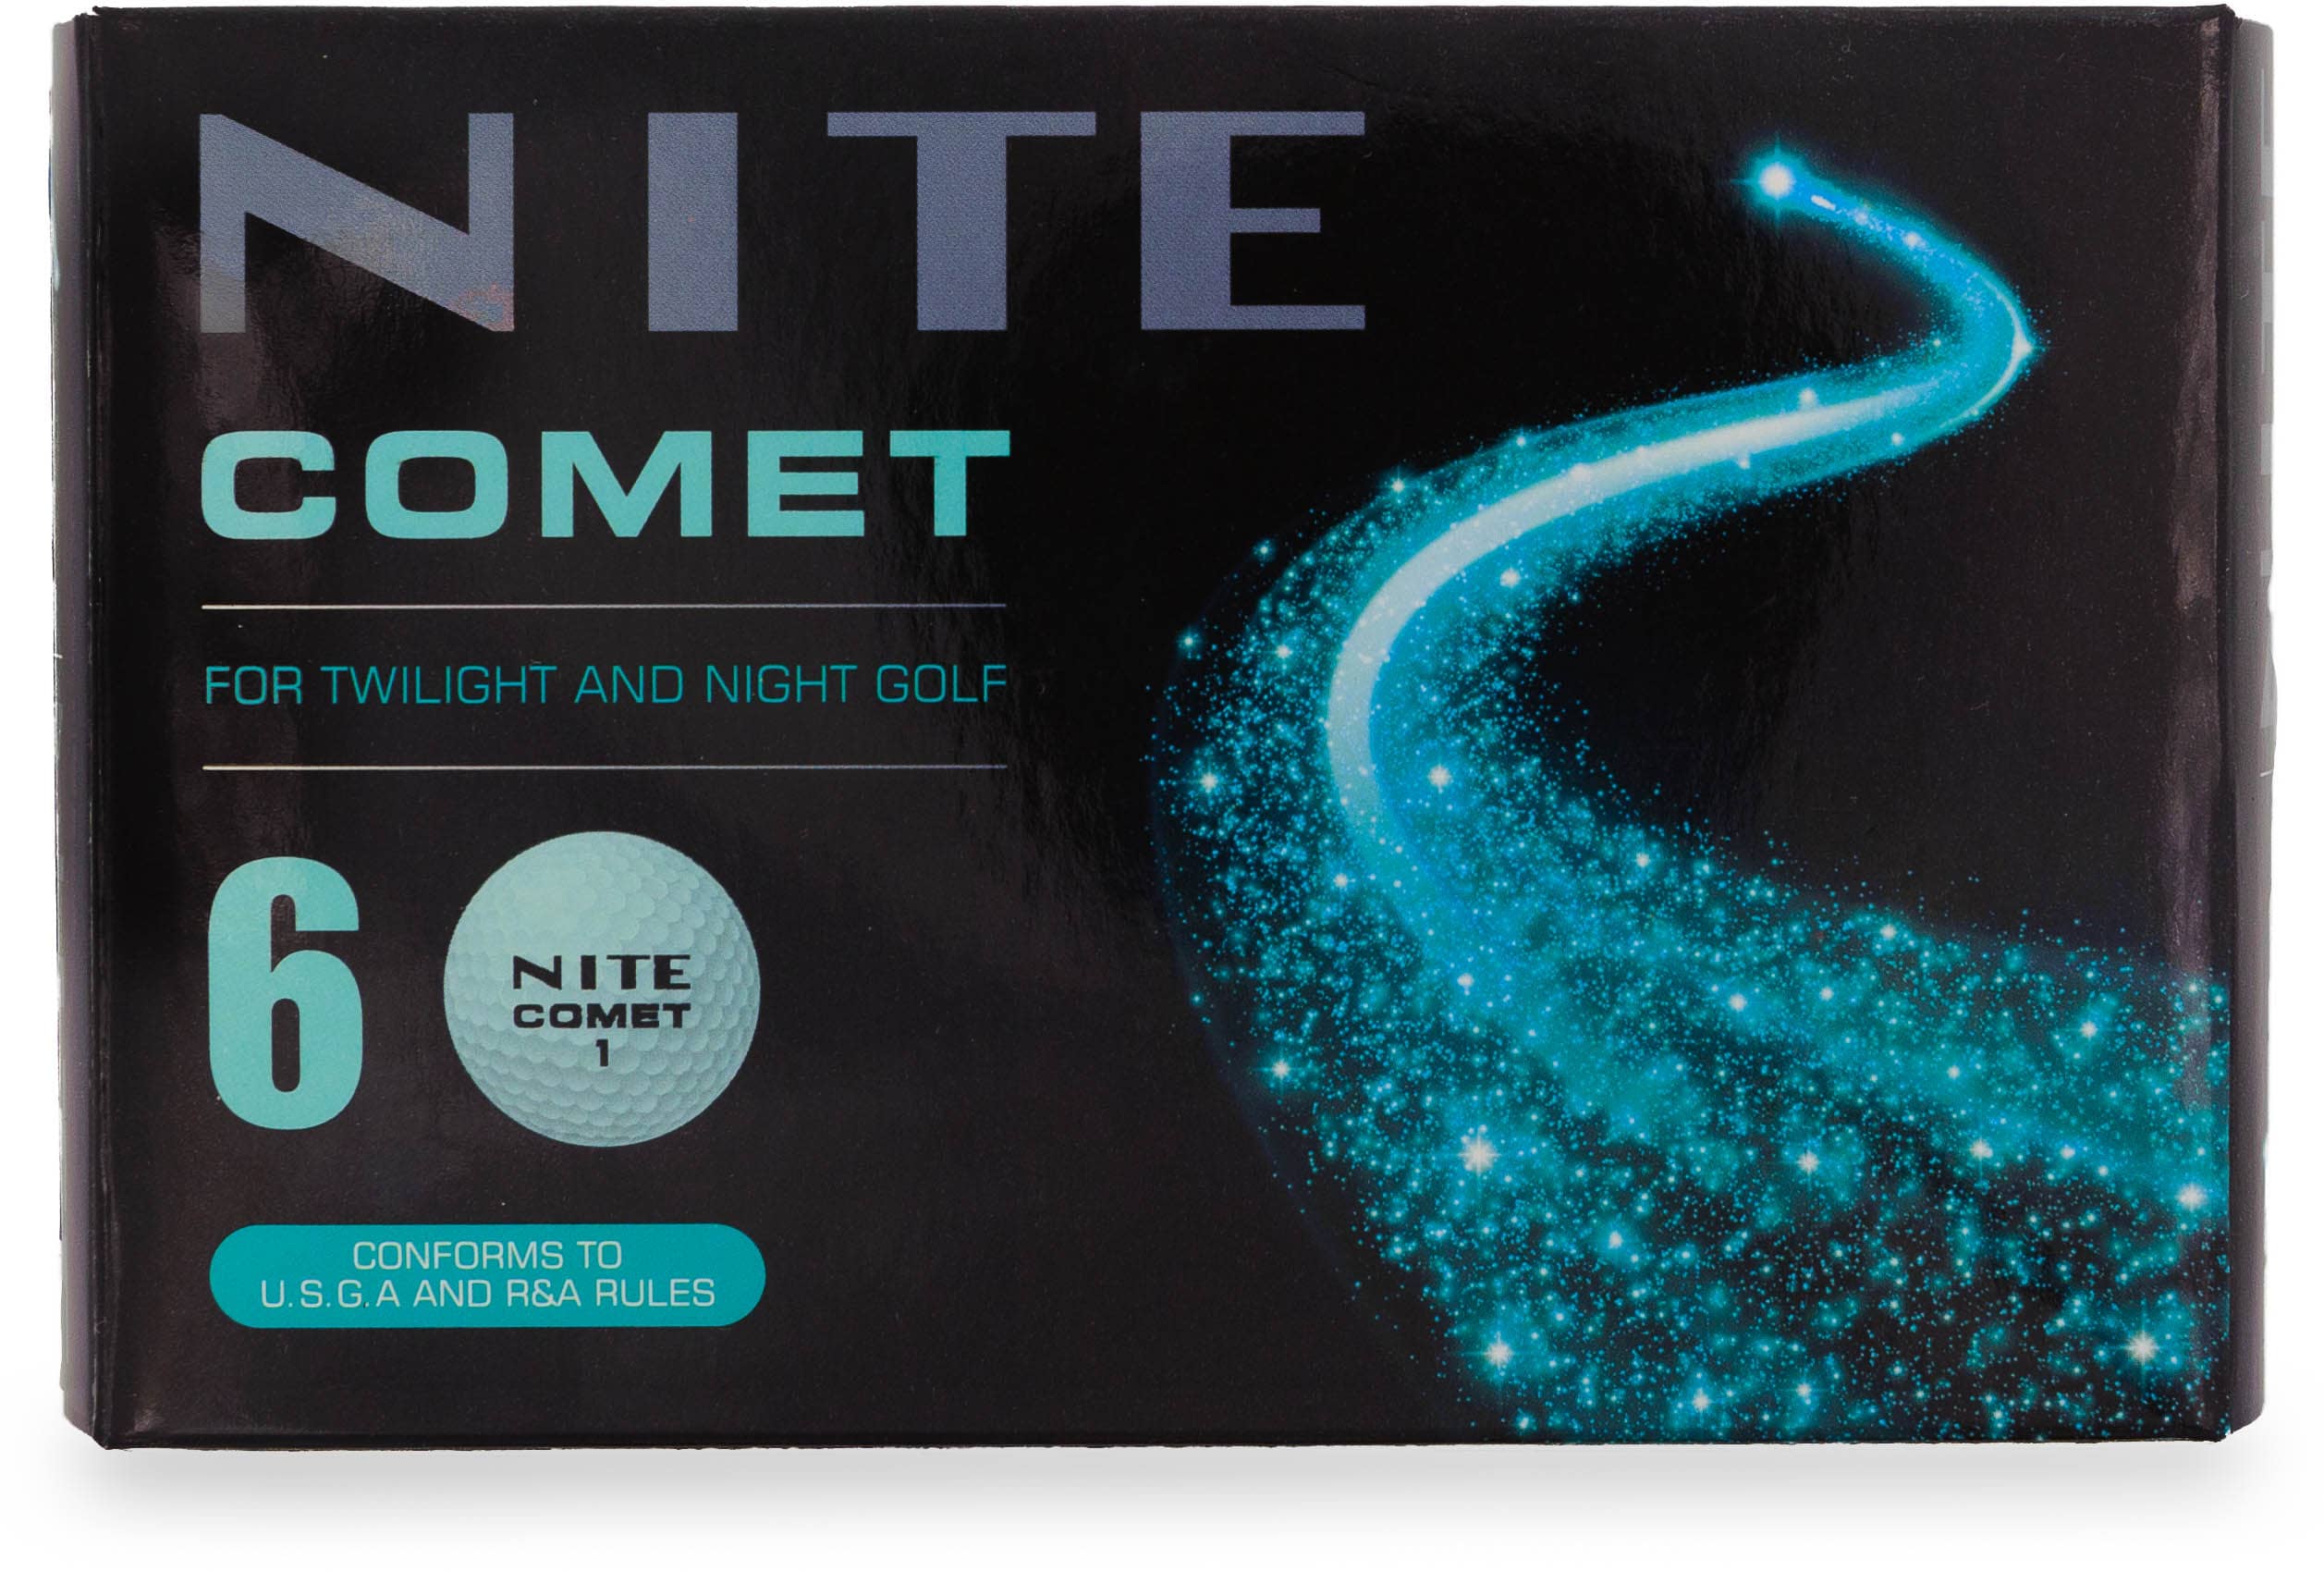 6 (neue) Legend Nite Comet Golfbälle, fluoreszierend